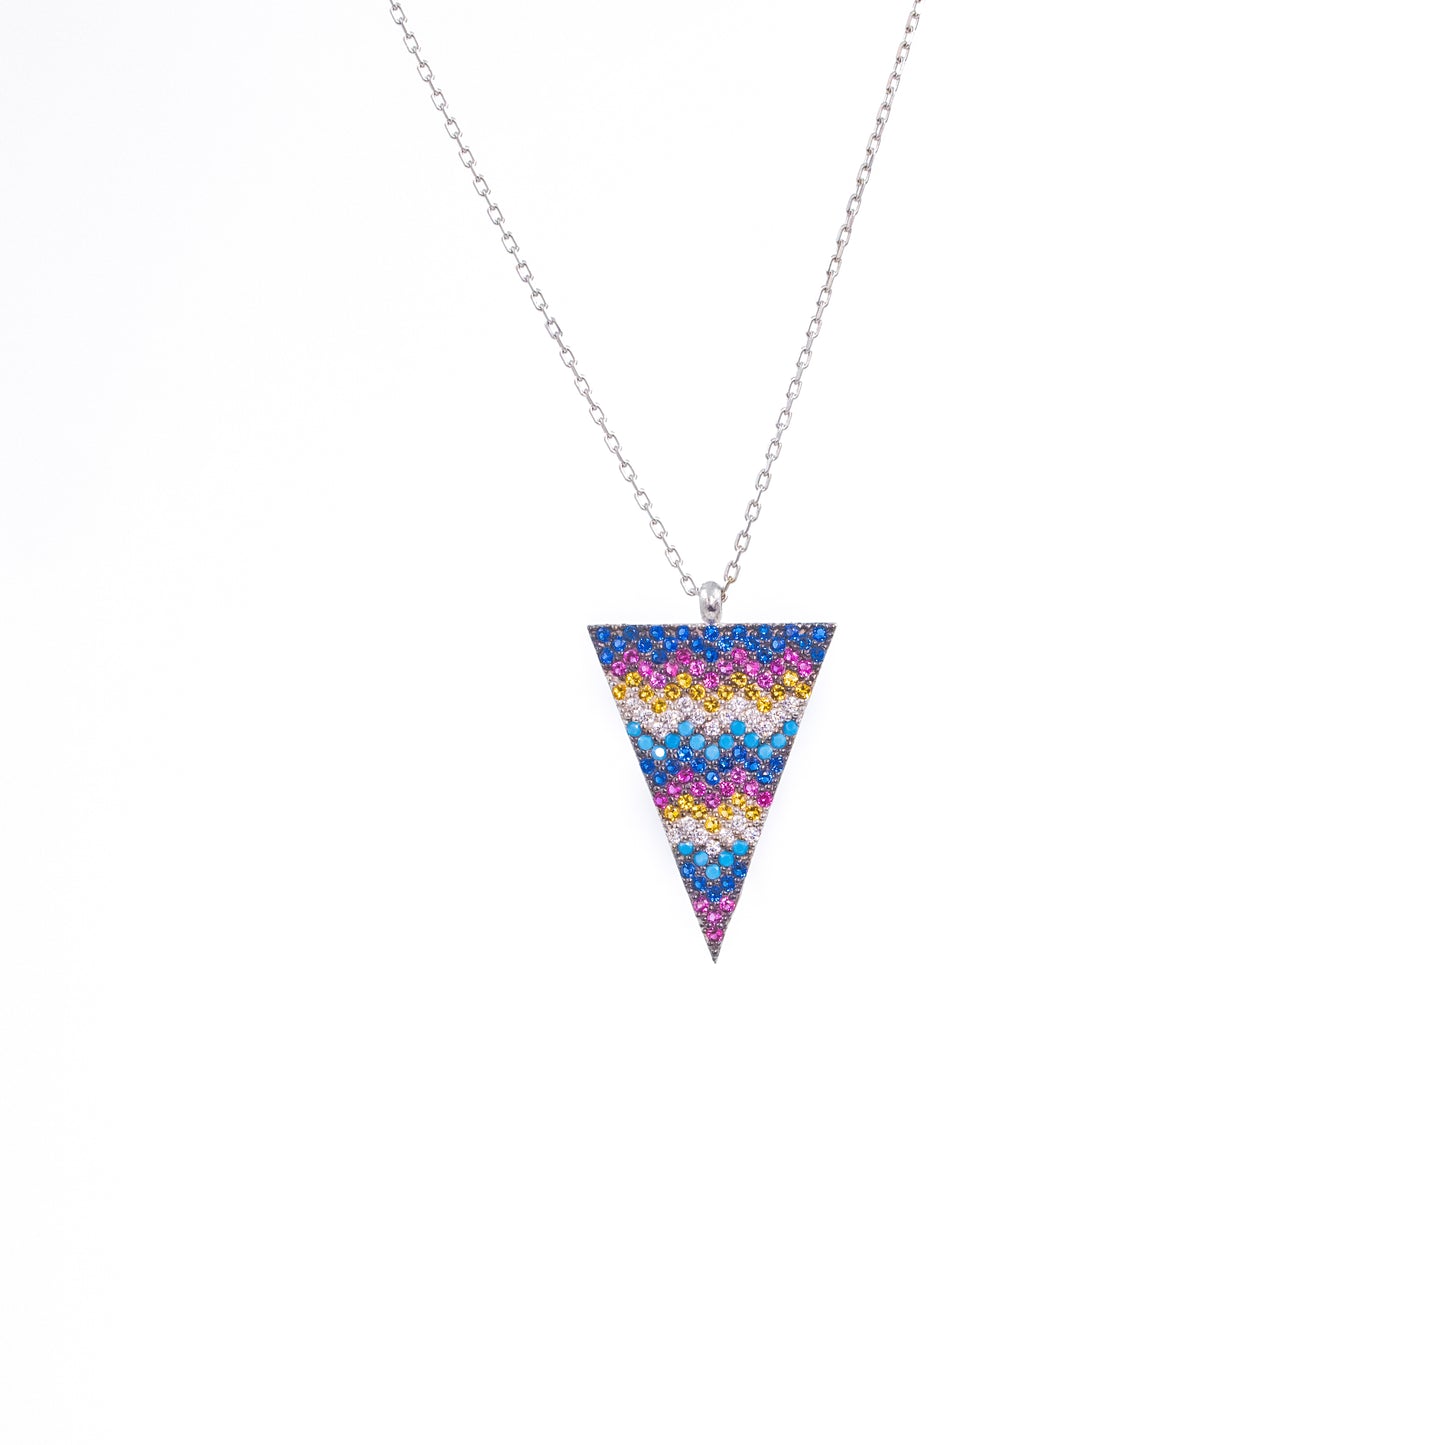 Silver Korean Prism Triad Chain Pendant